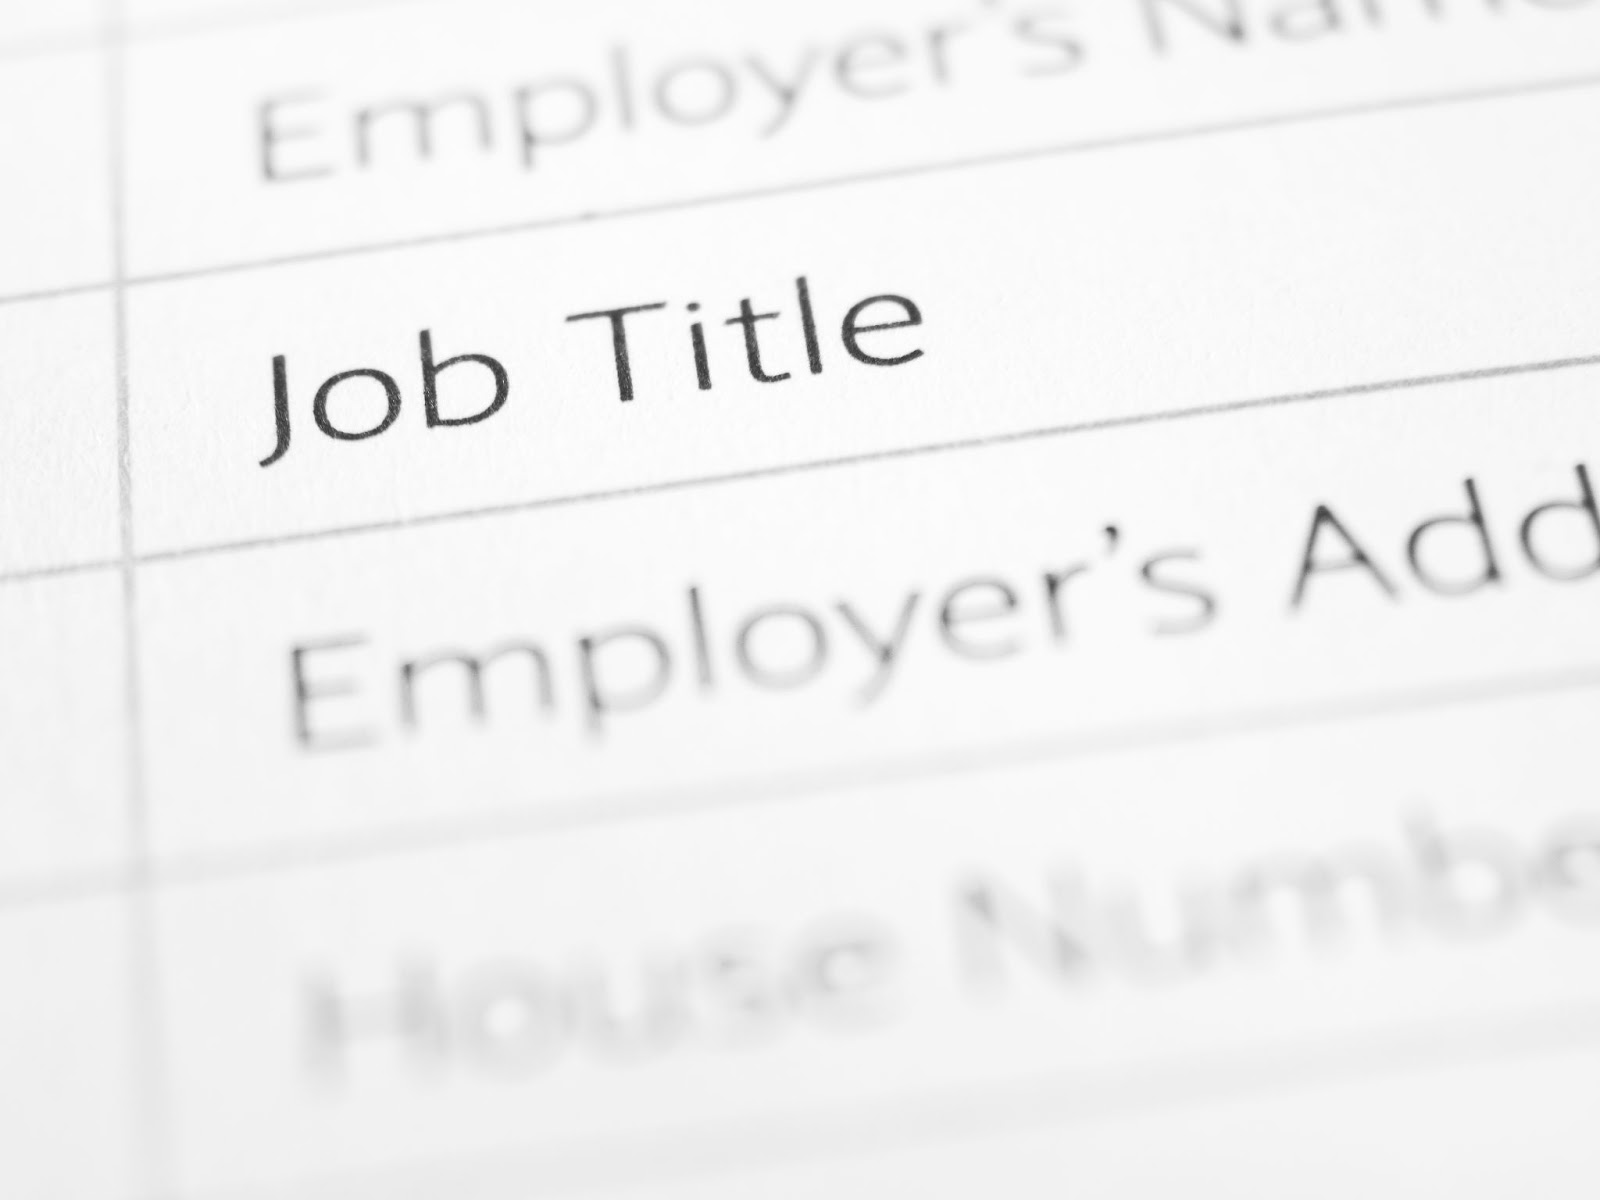 The Pitfalls of Inflating Job Titles